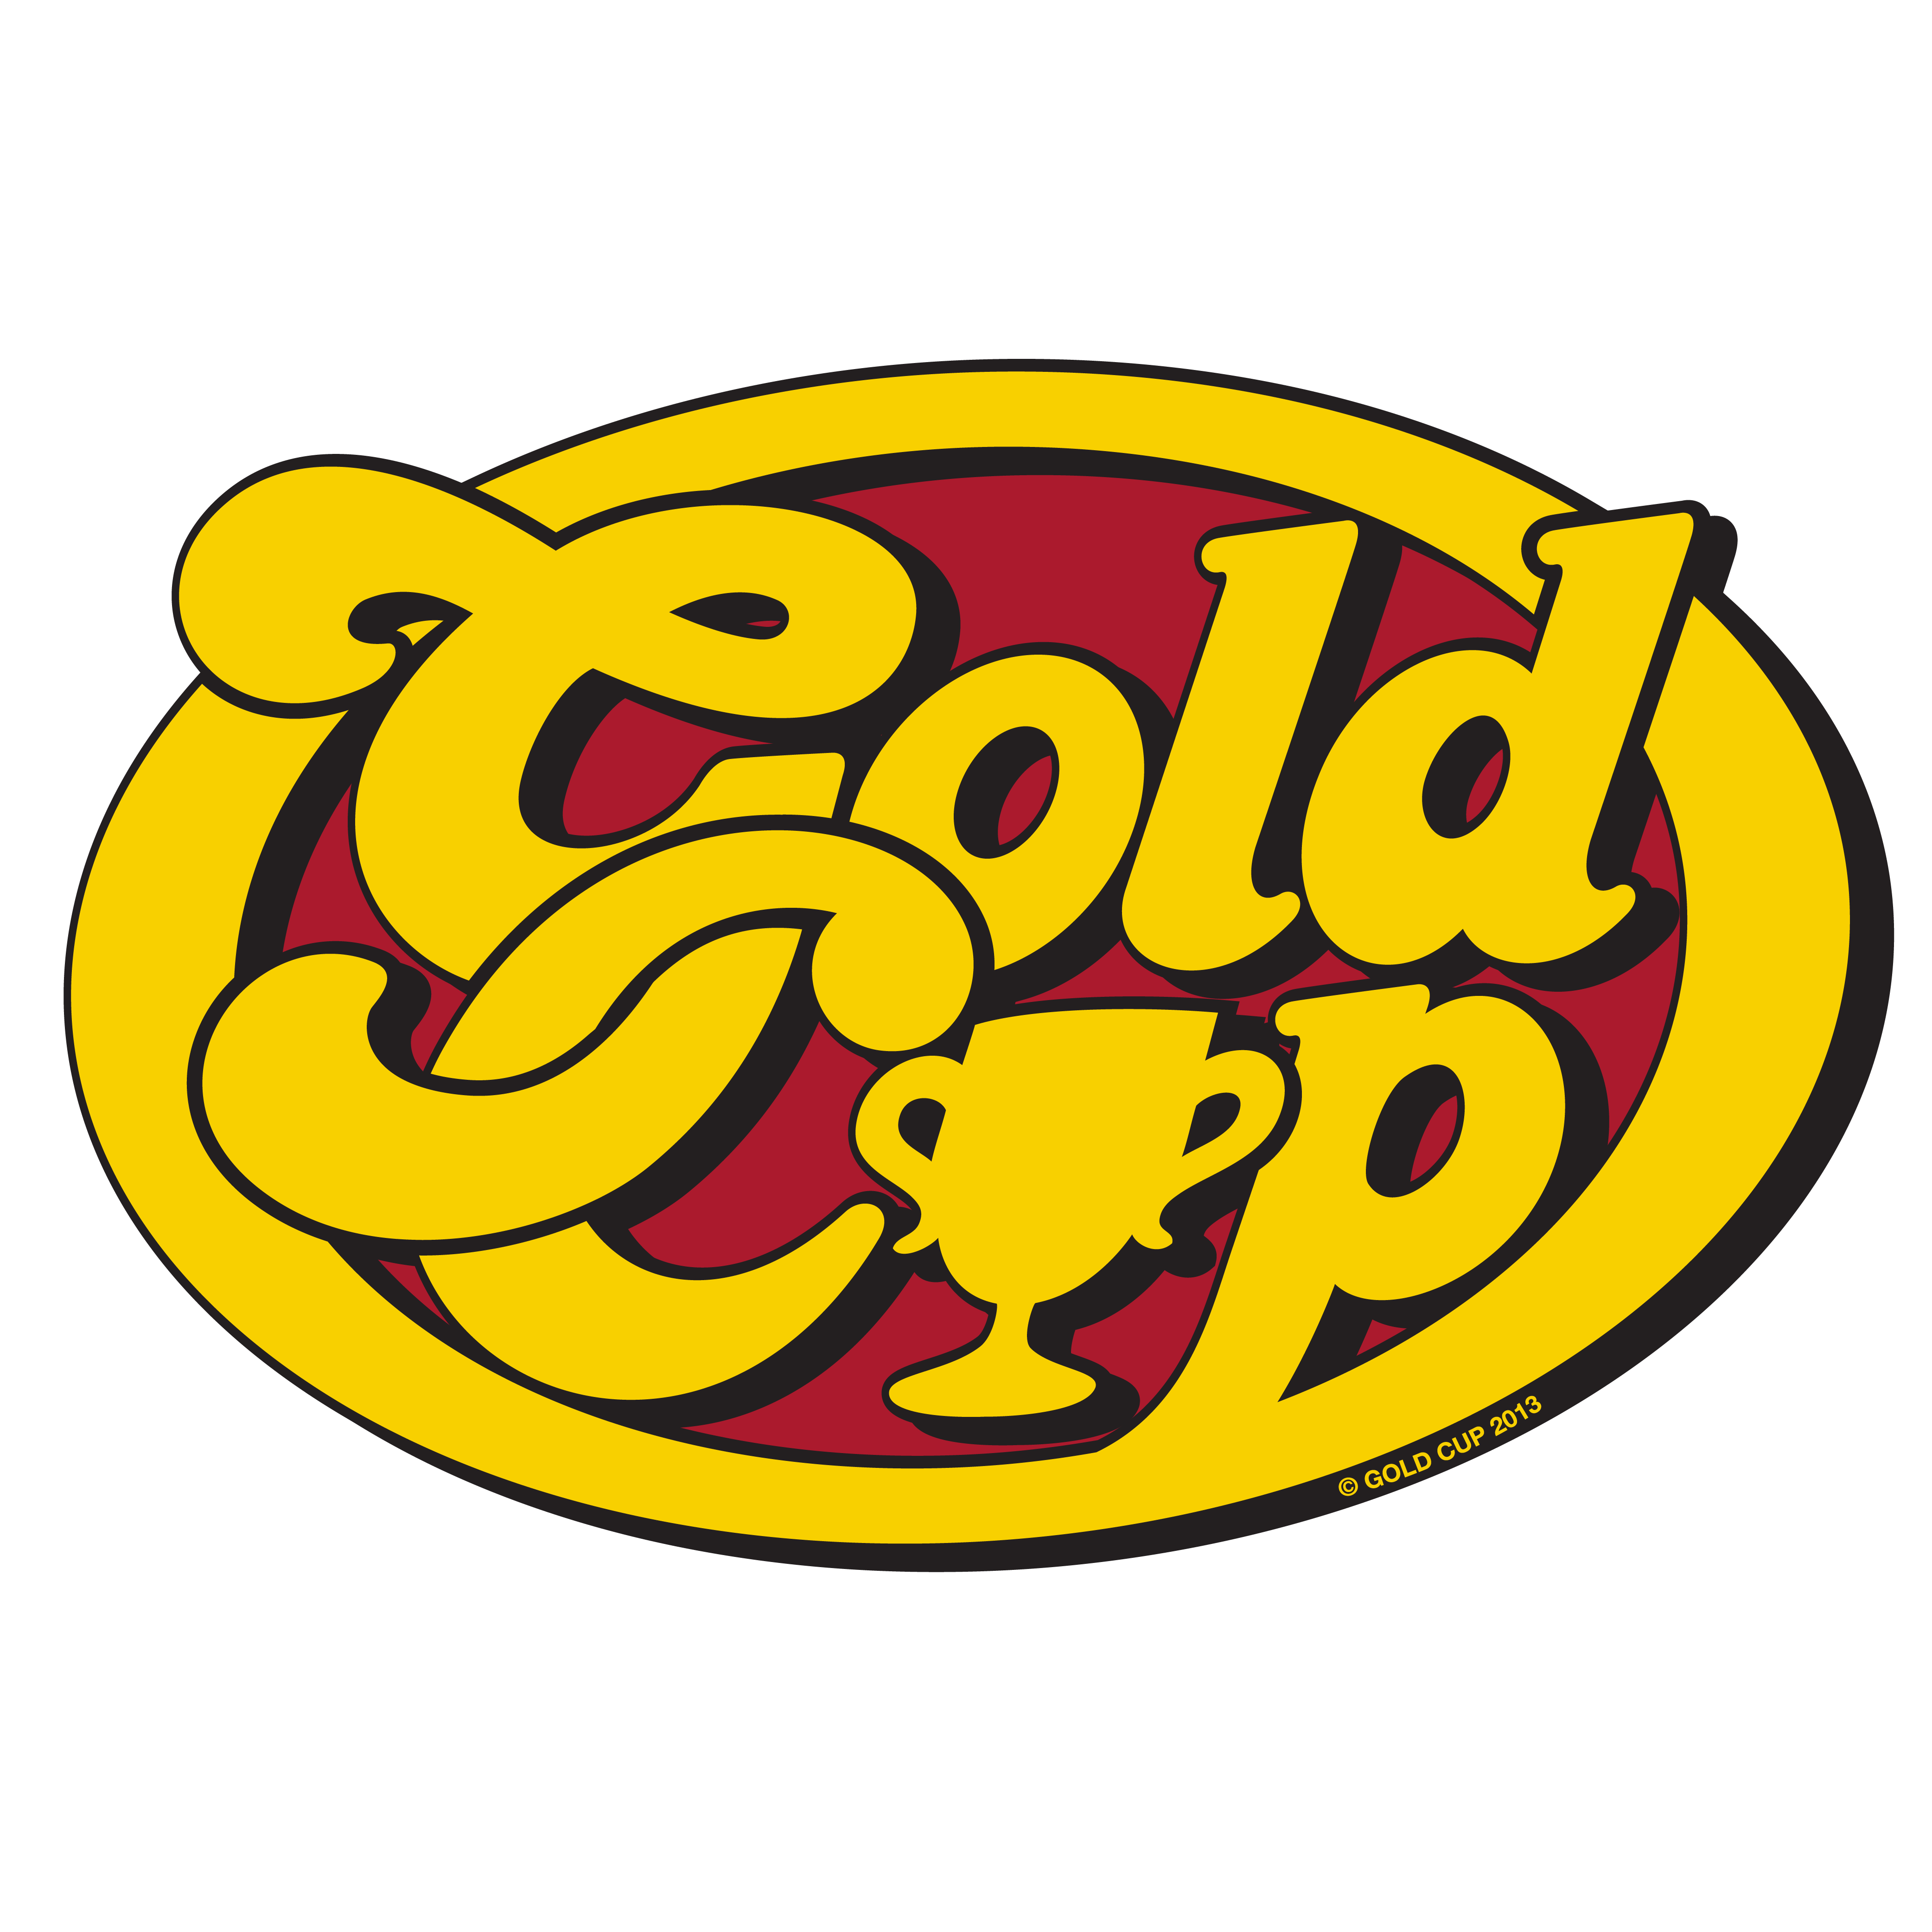 Gold Cup flipskateboards